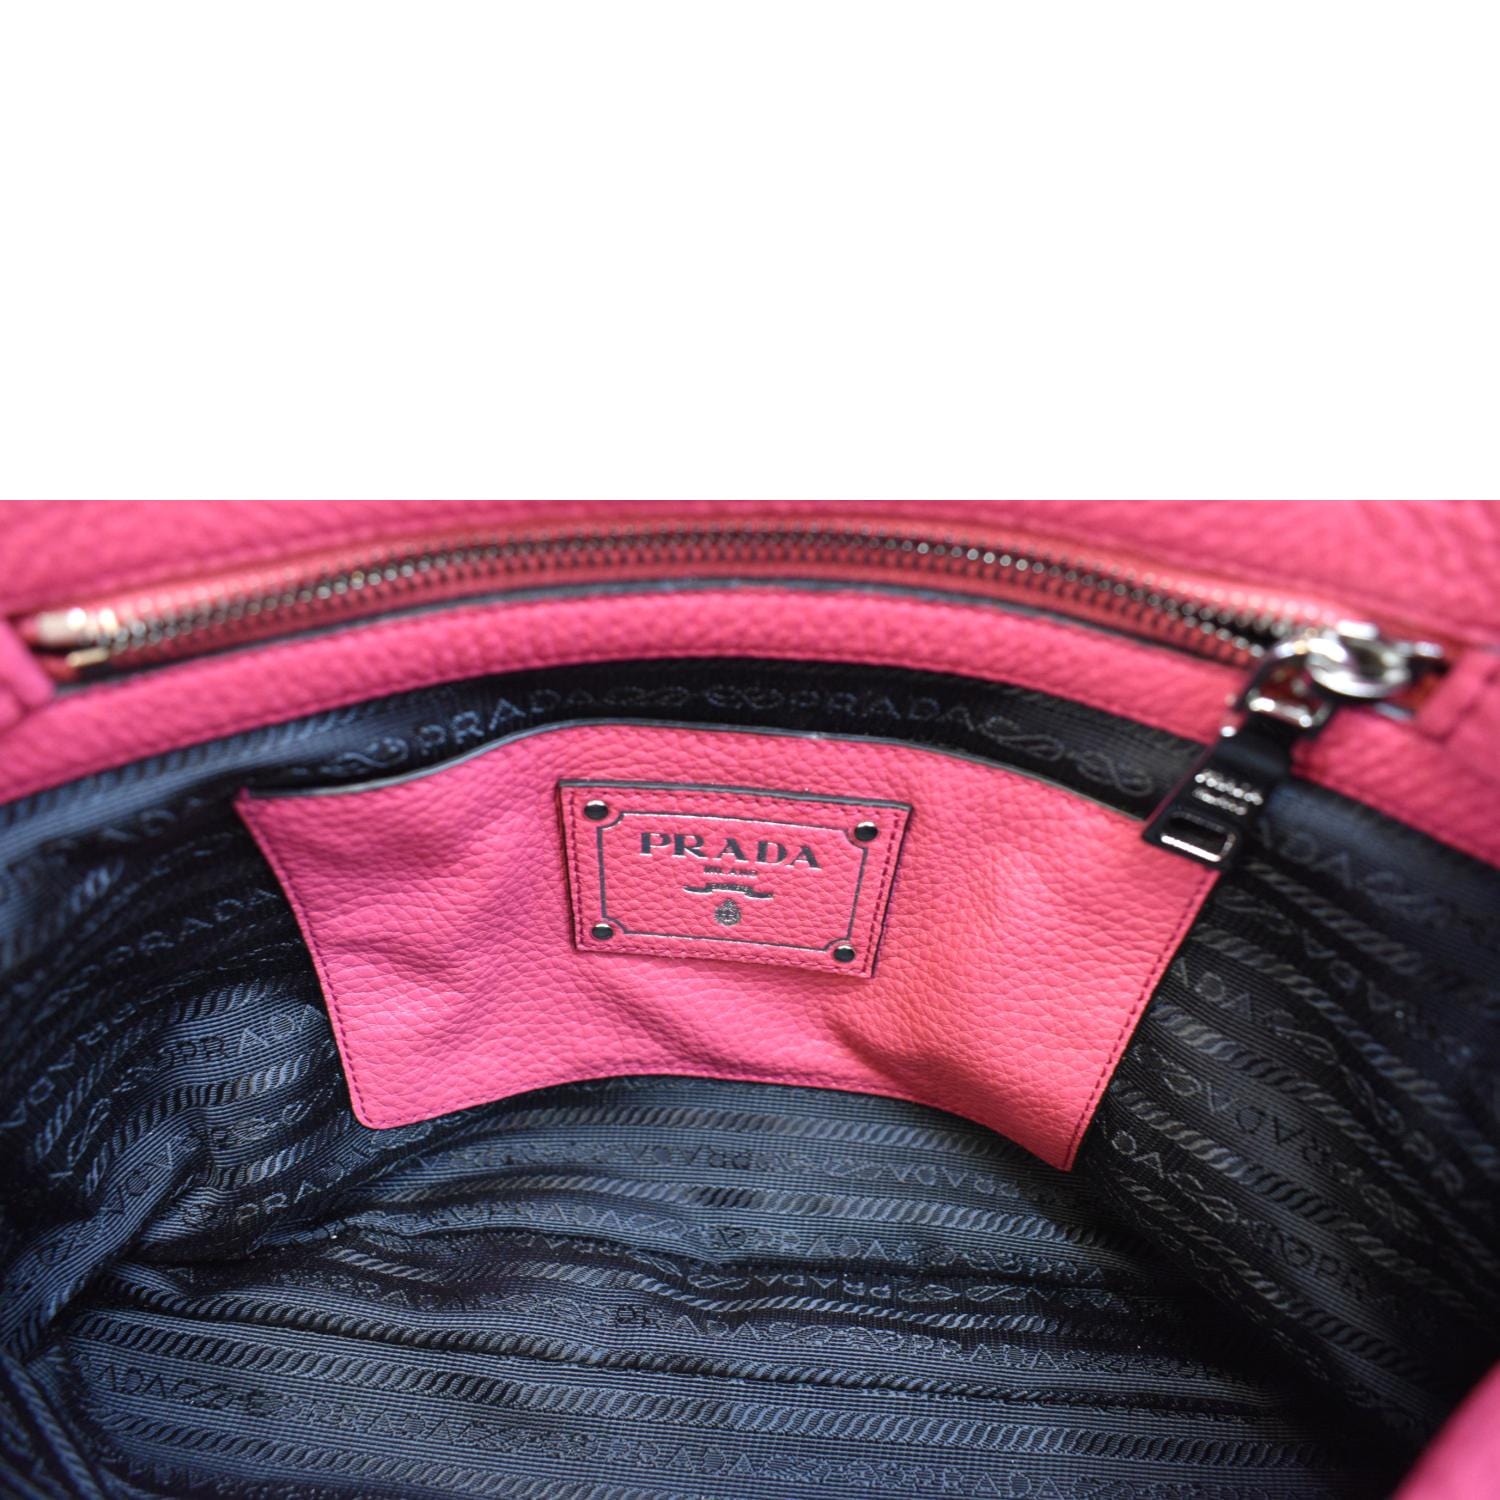 Prada Pink Leather Pattina Shoulder Bag